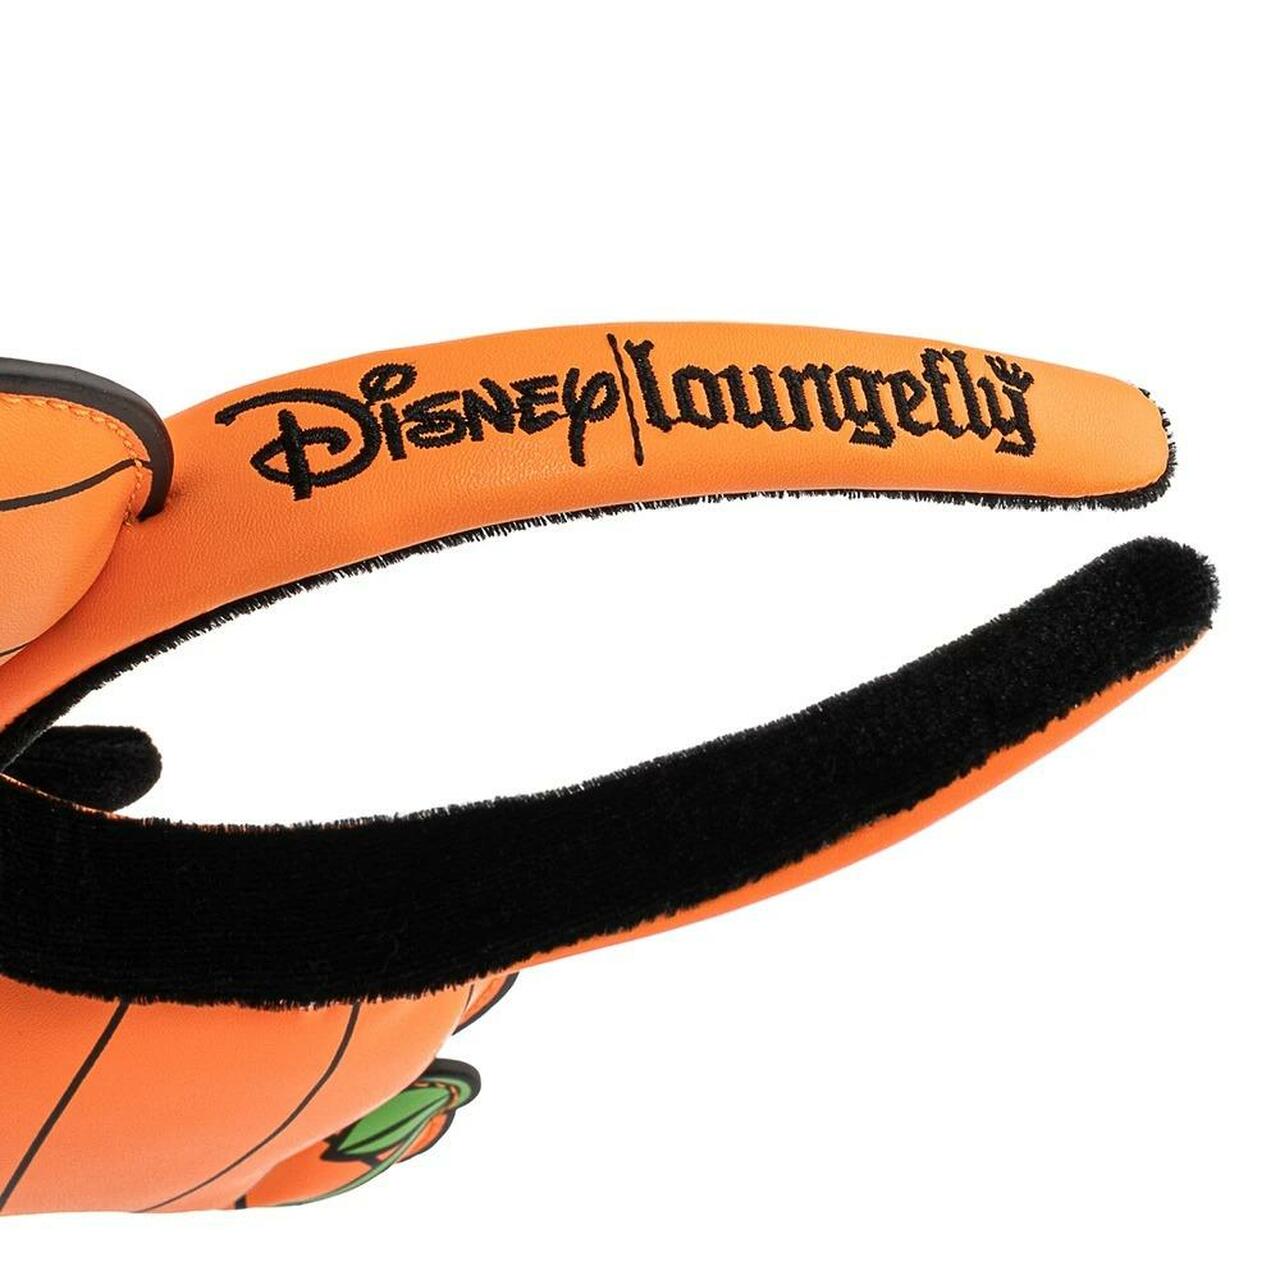 Disney Mick-O-Lantern Ears